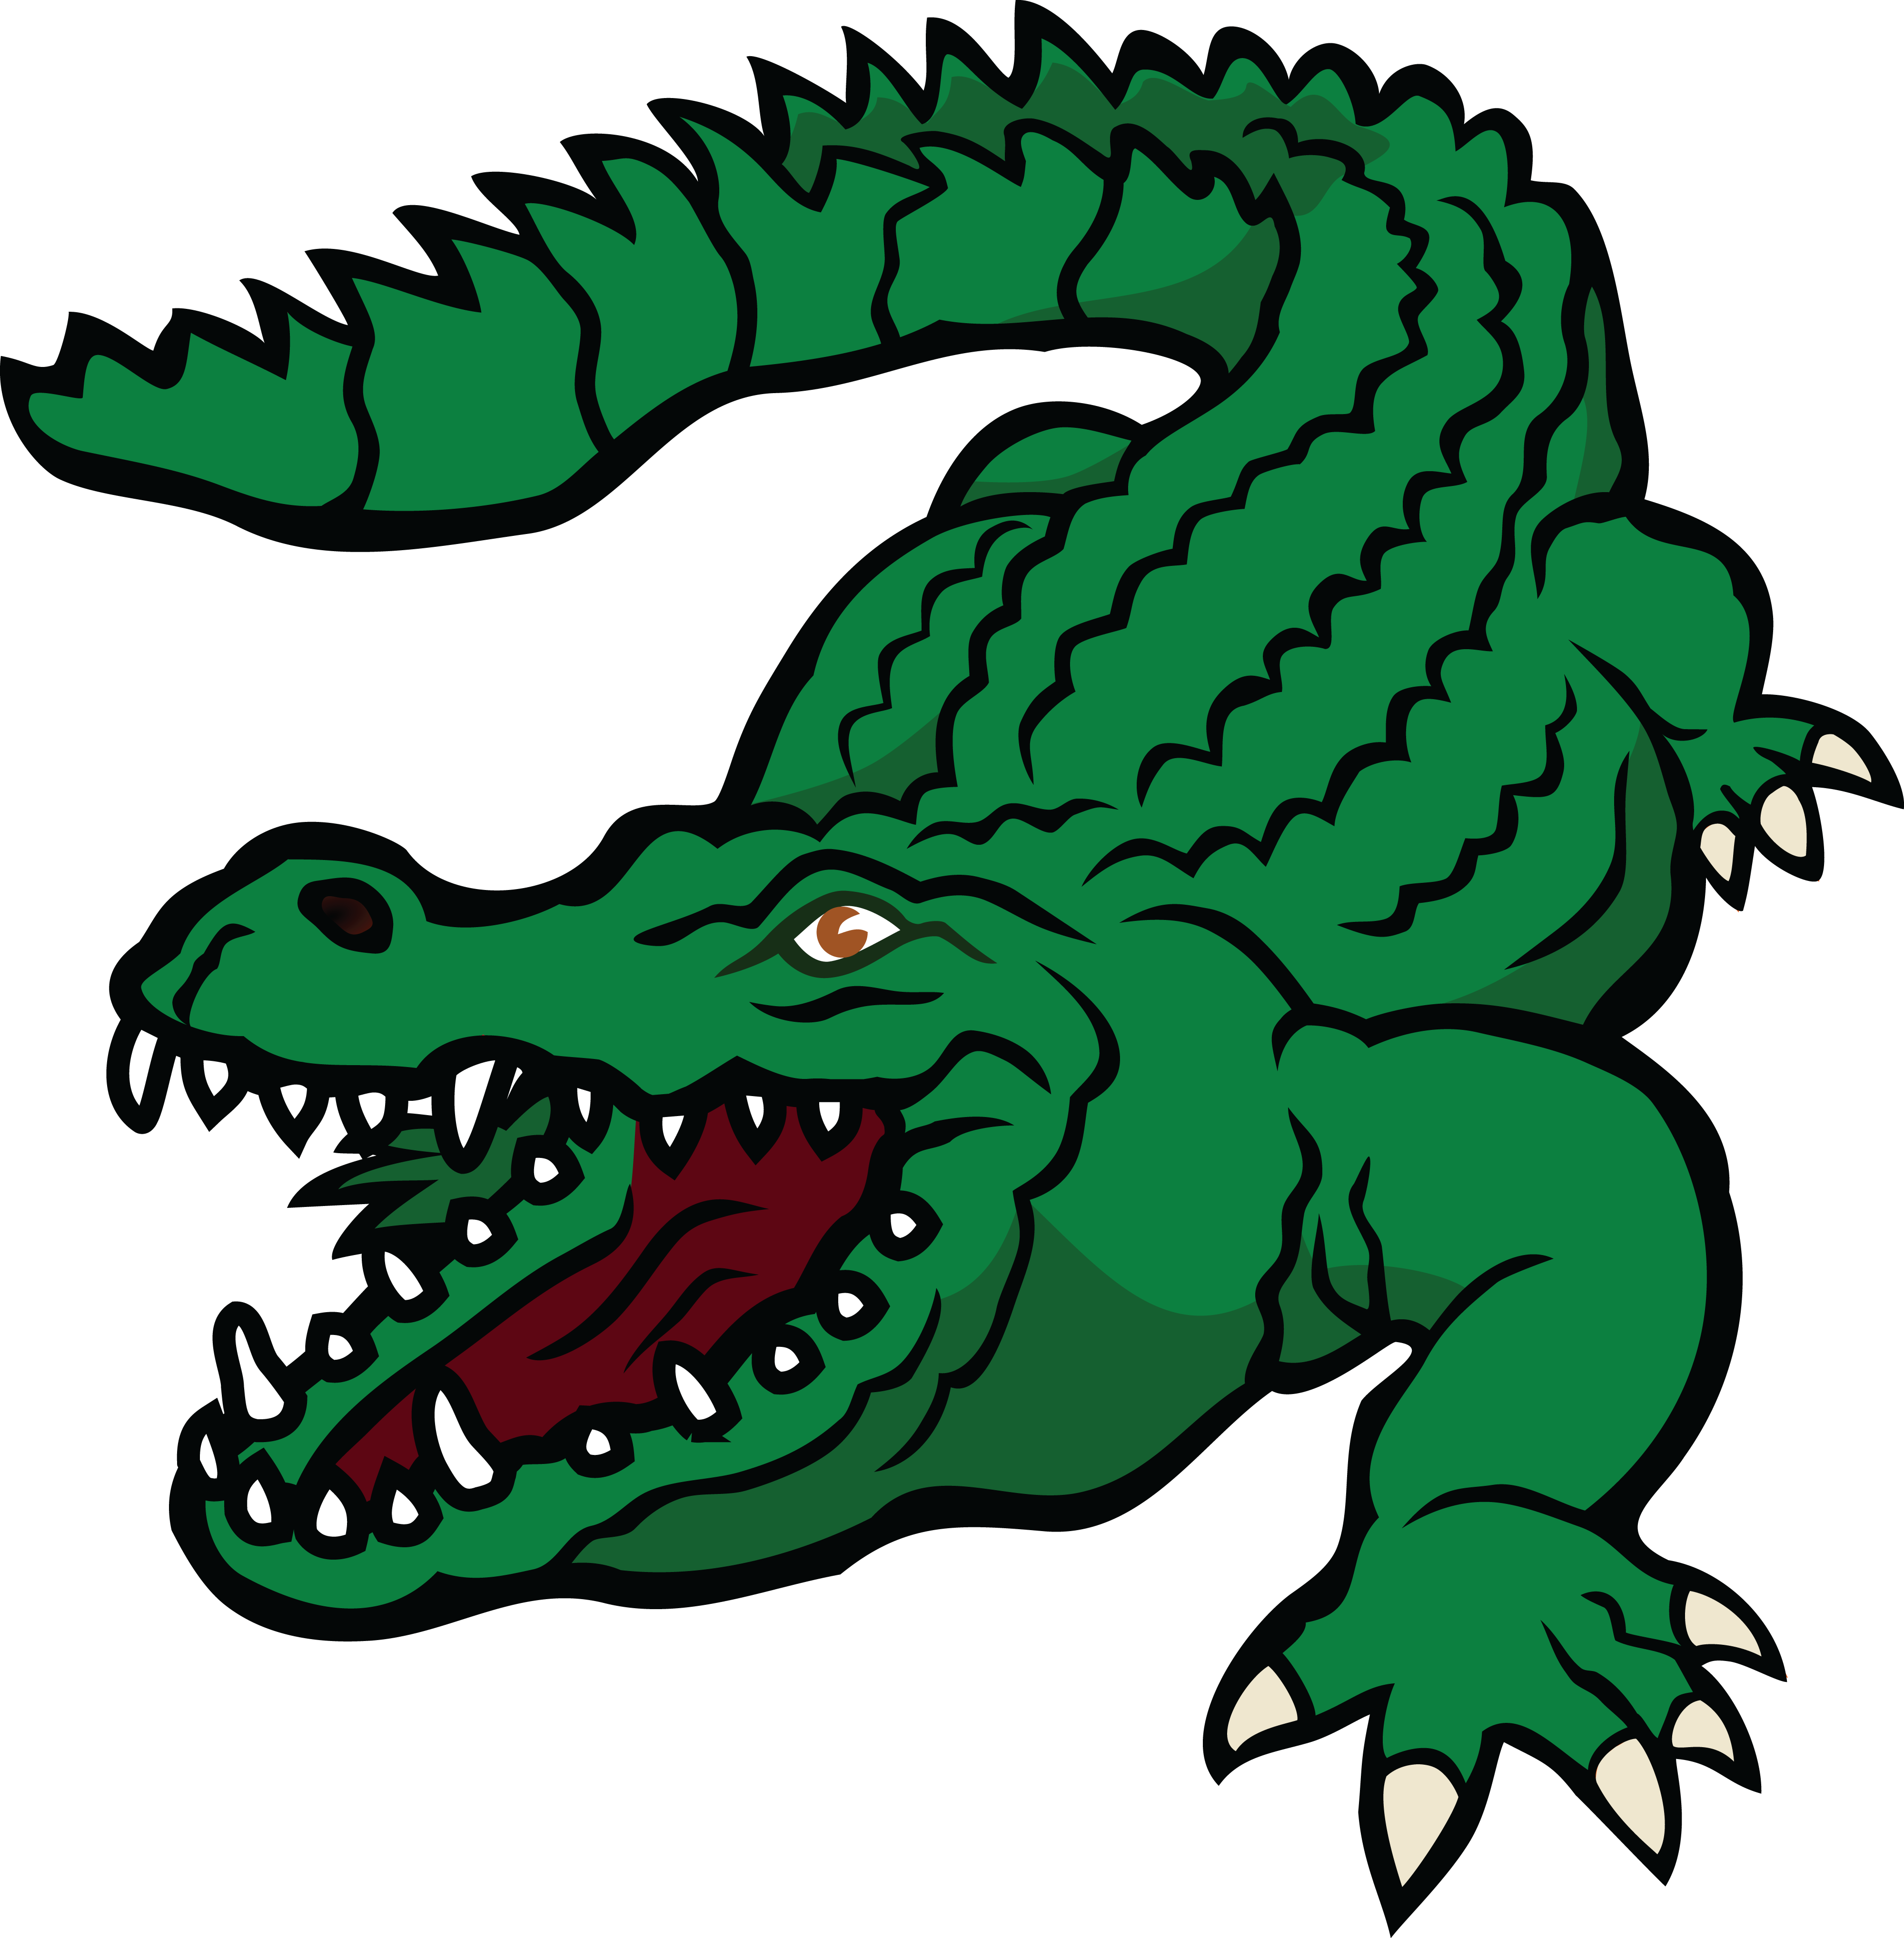 A Green Alligator With Sharp Teeth